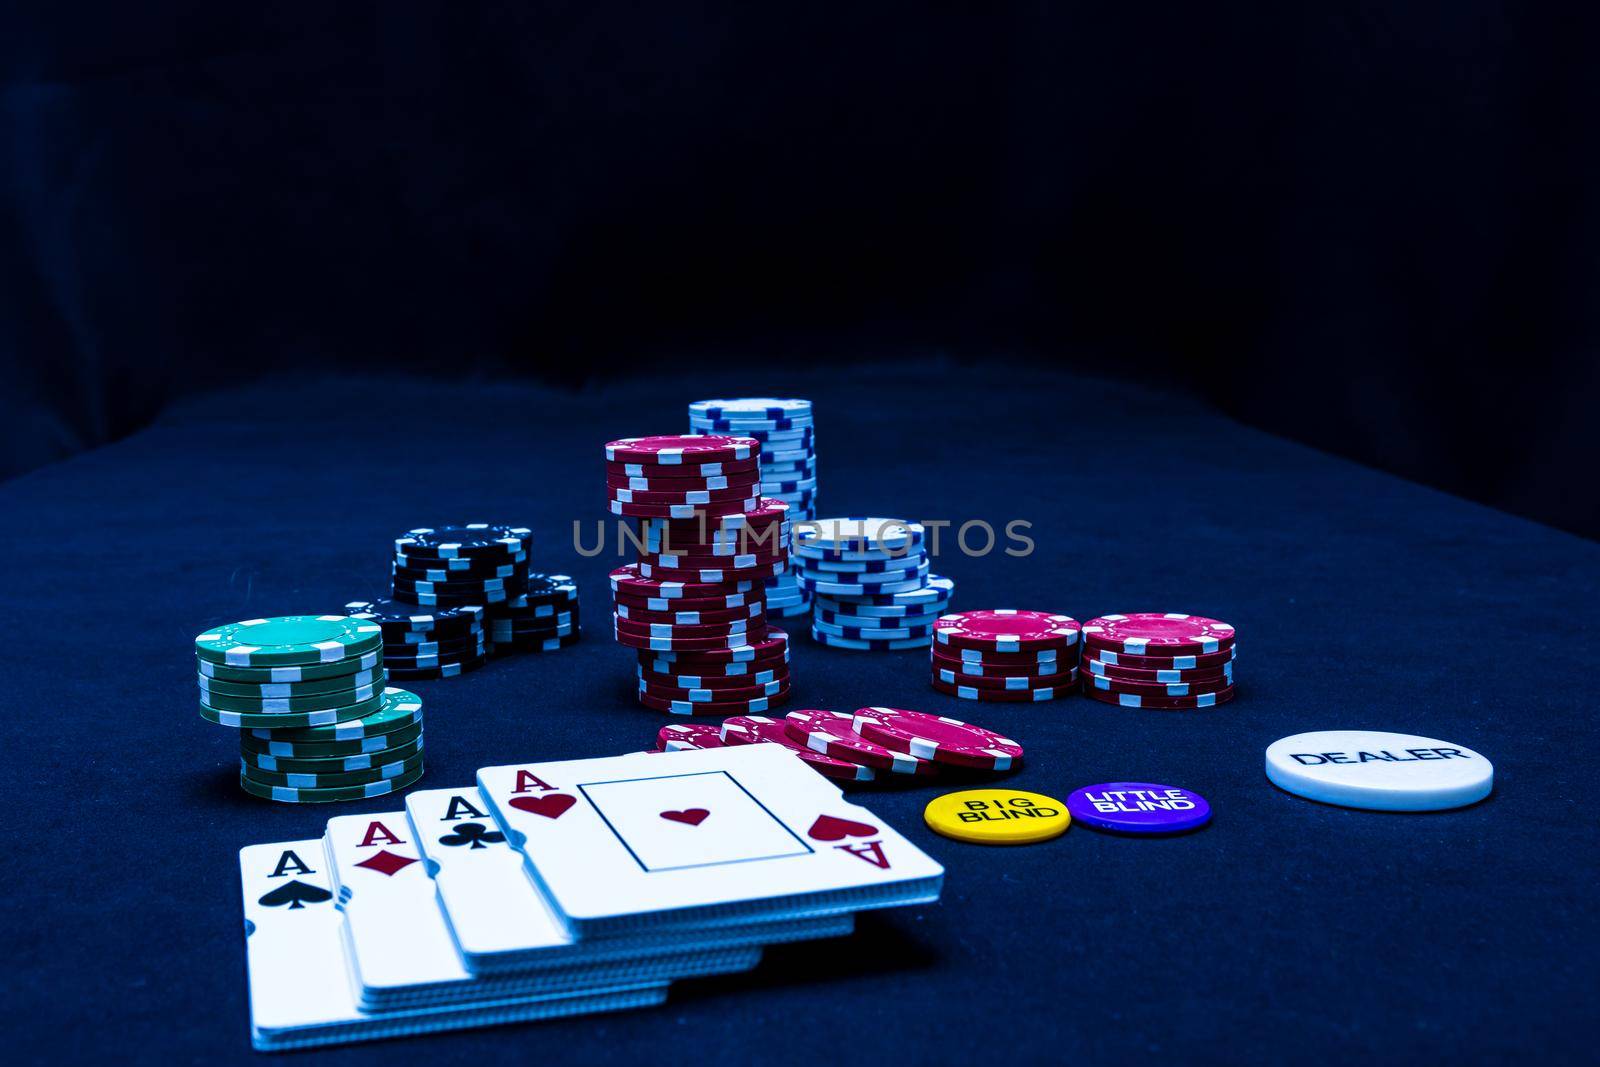 Stack of poker chips and poker cards on black background by vladispas